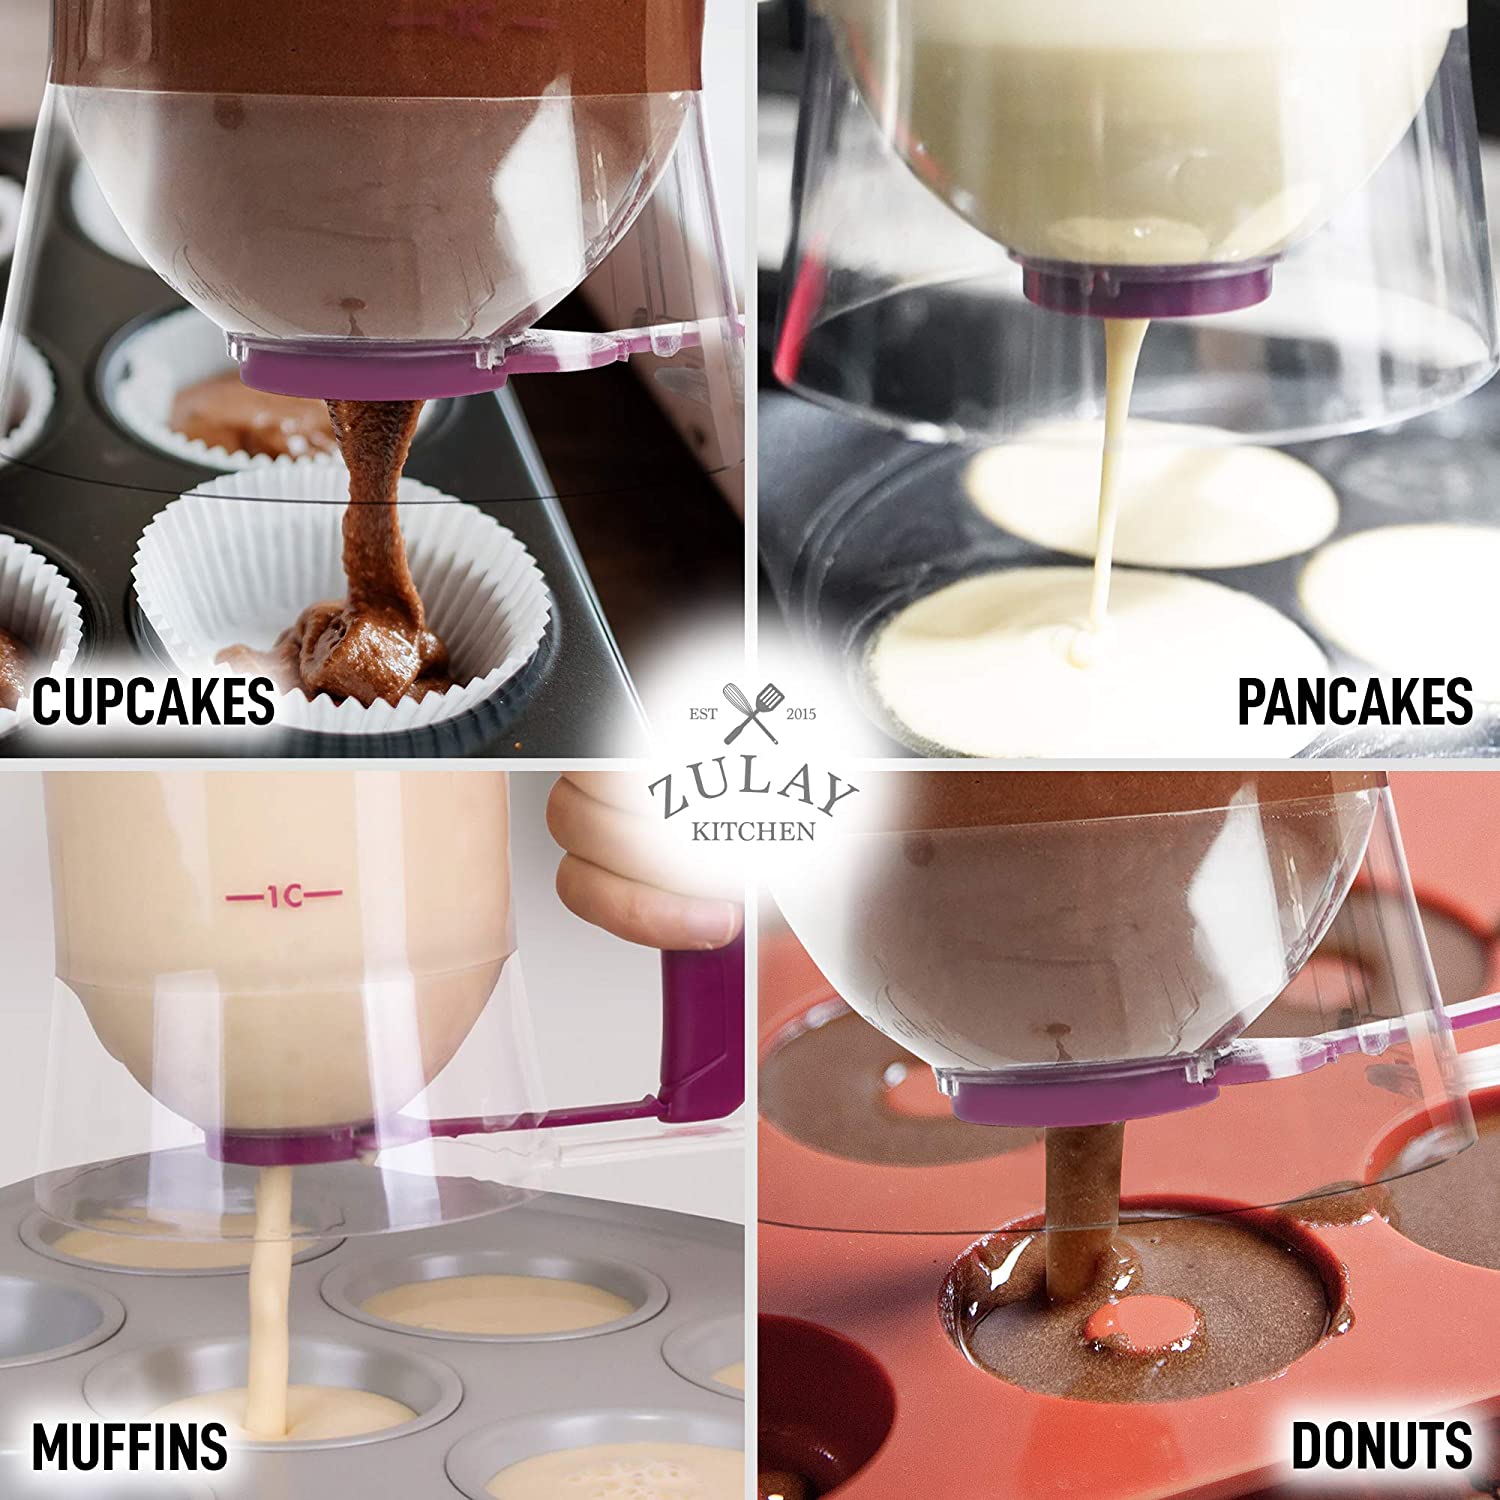 Pancake Batter Dispenser - 4 Cup - Zulay KitchenZulay Kitchen